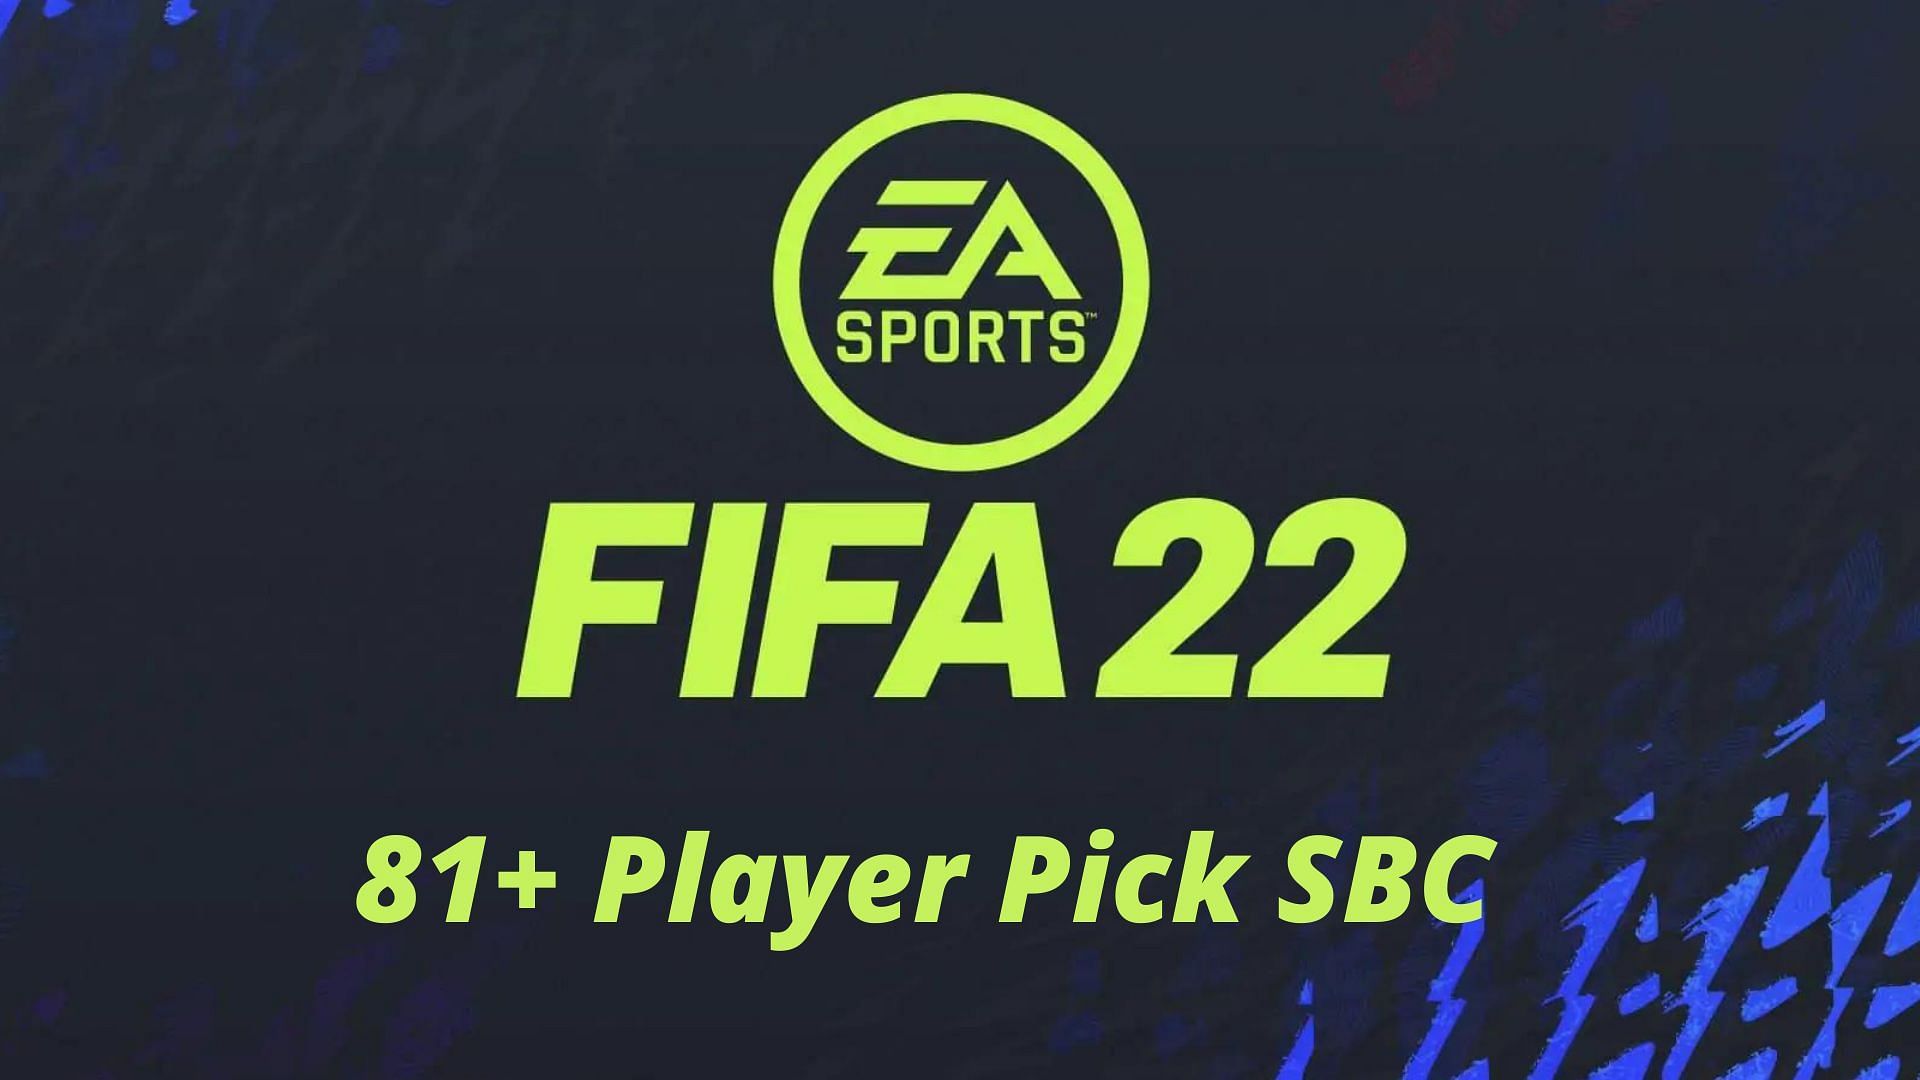 81+ Player Pick SBC is now live in FIFA 22 (Image via Sportskeeda)